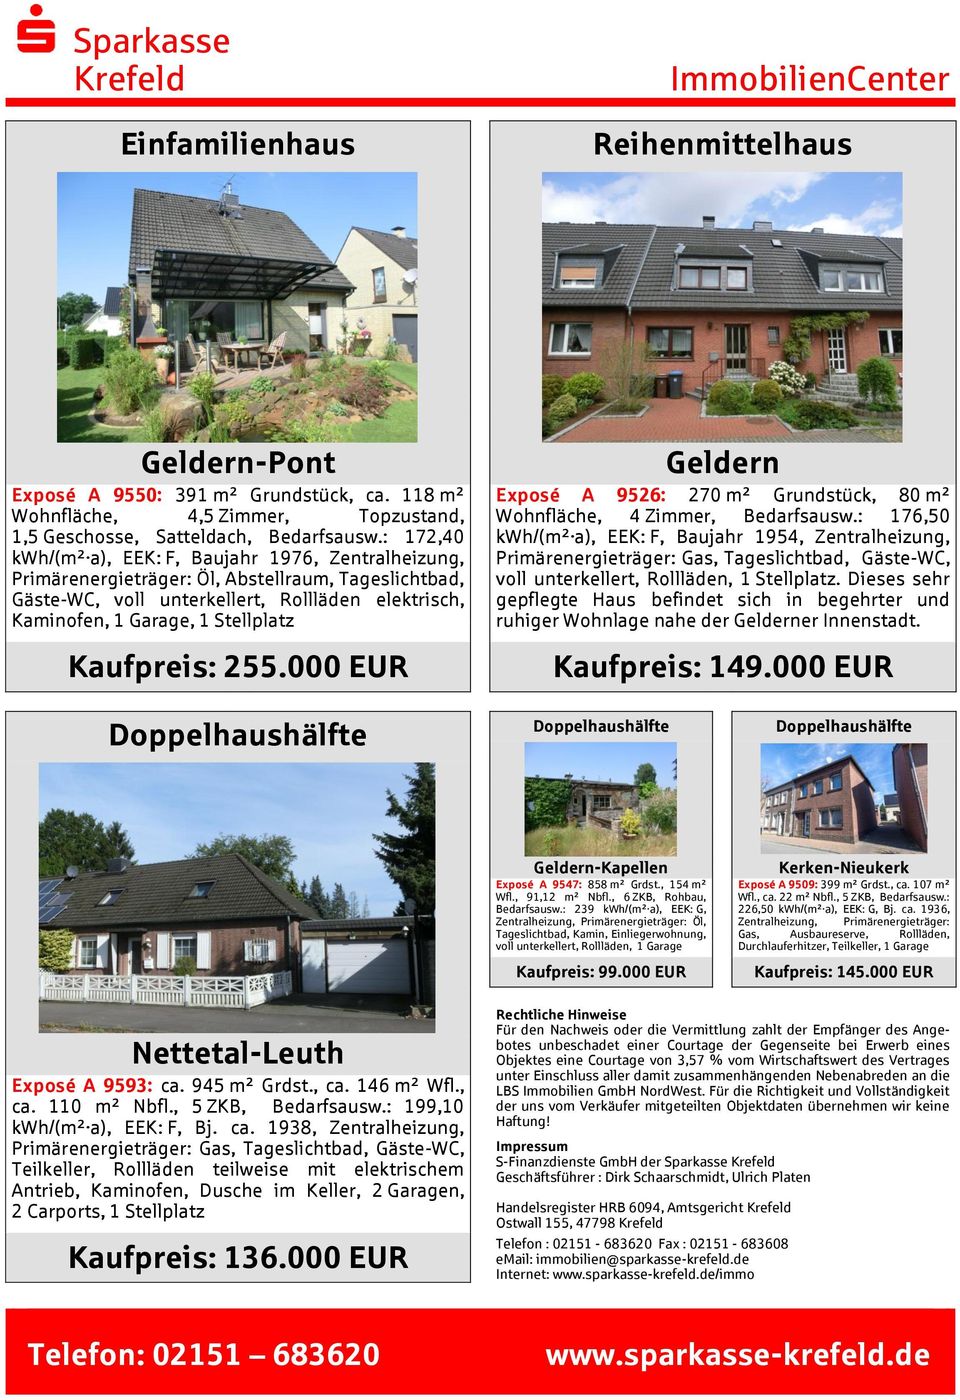 Kaufpreis: 255.000 EUR Geldern Exposé A 9526: 270 m² Grundstück, 80 m² Wohnfläche, 4 Zimmer, Bedarfsausw.